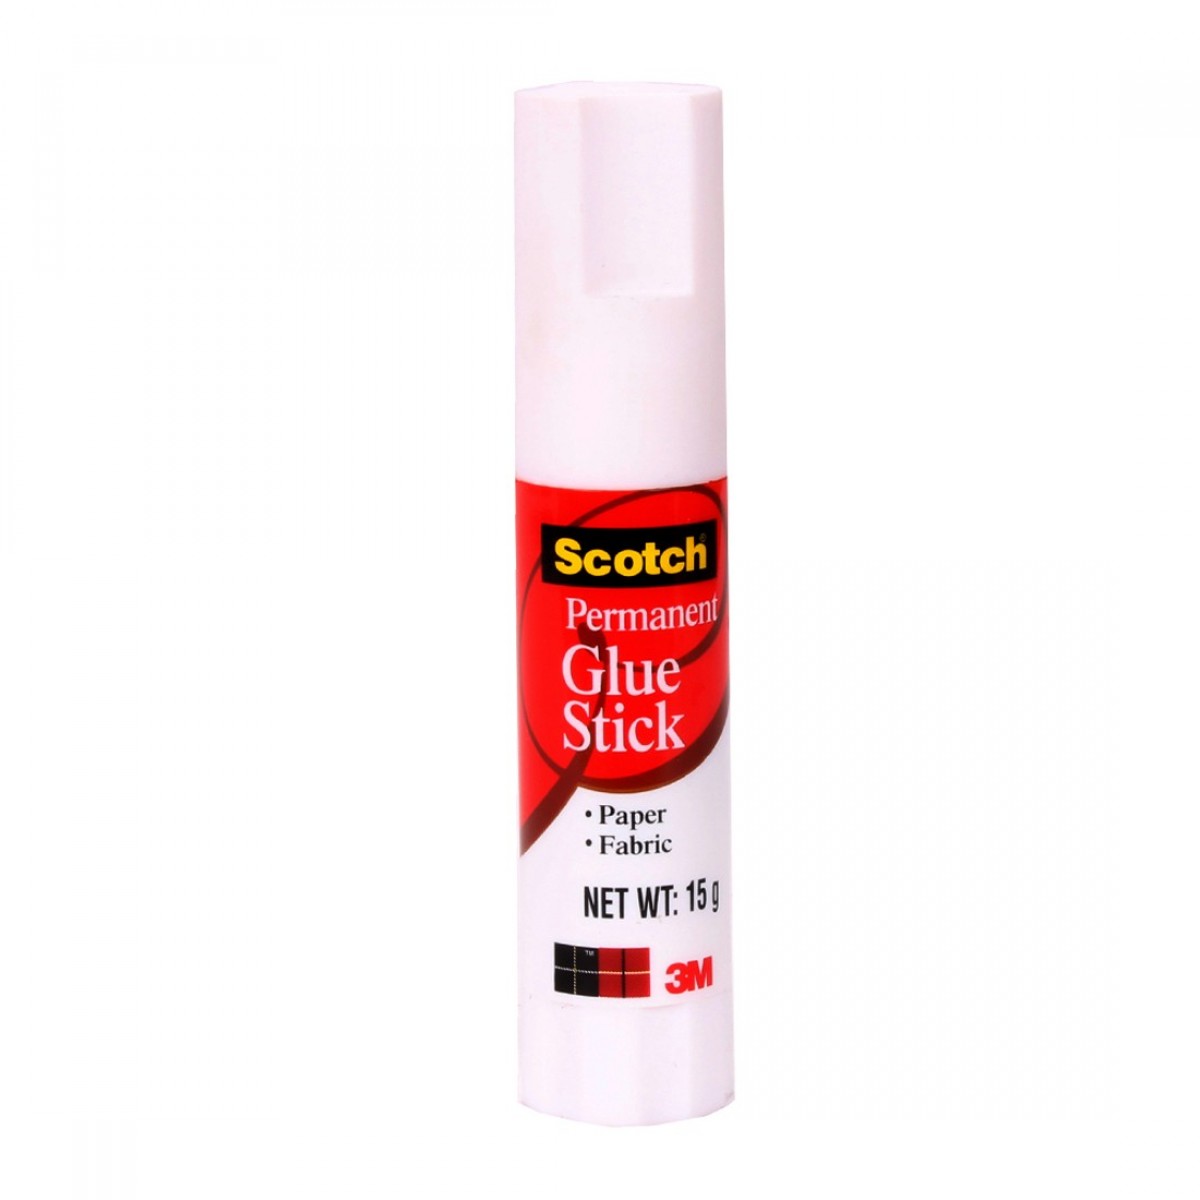 Scotch Glue Sticks for sale online